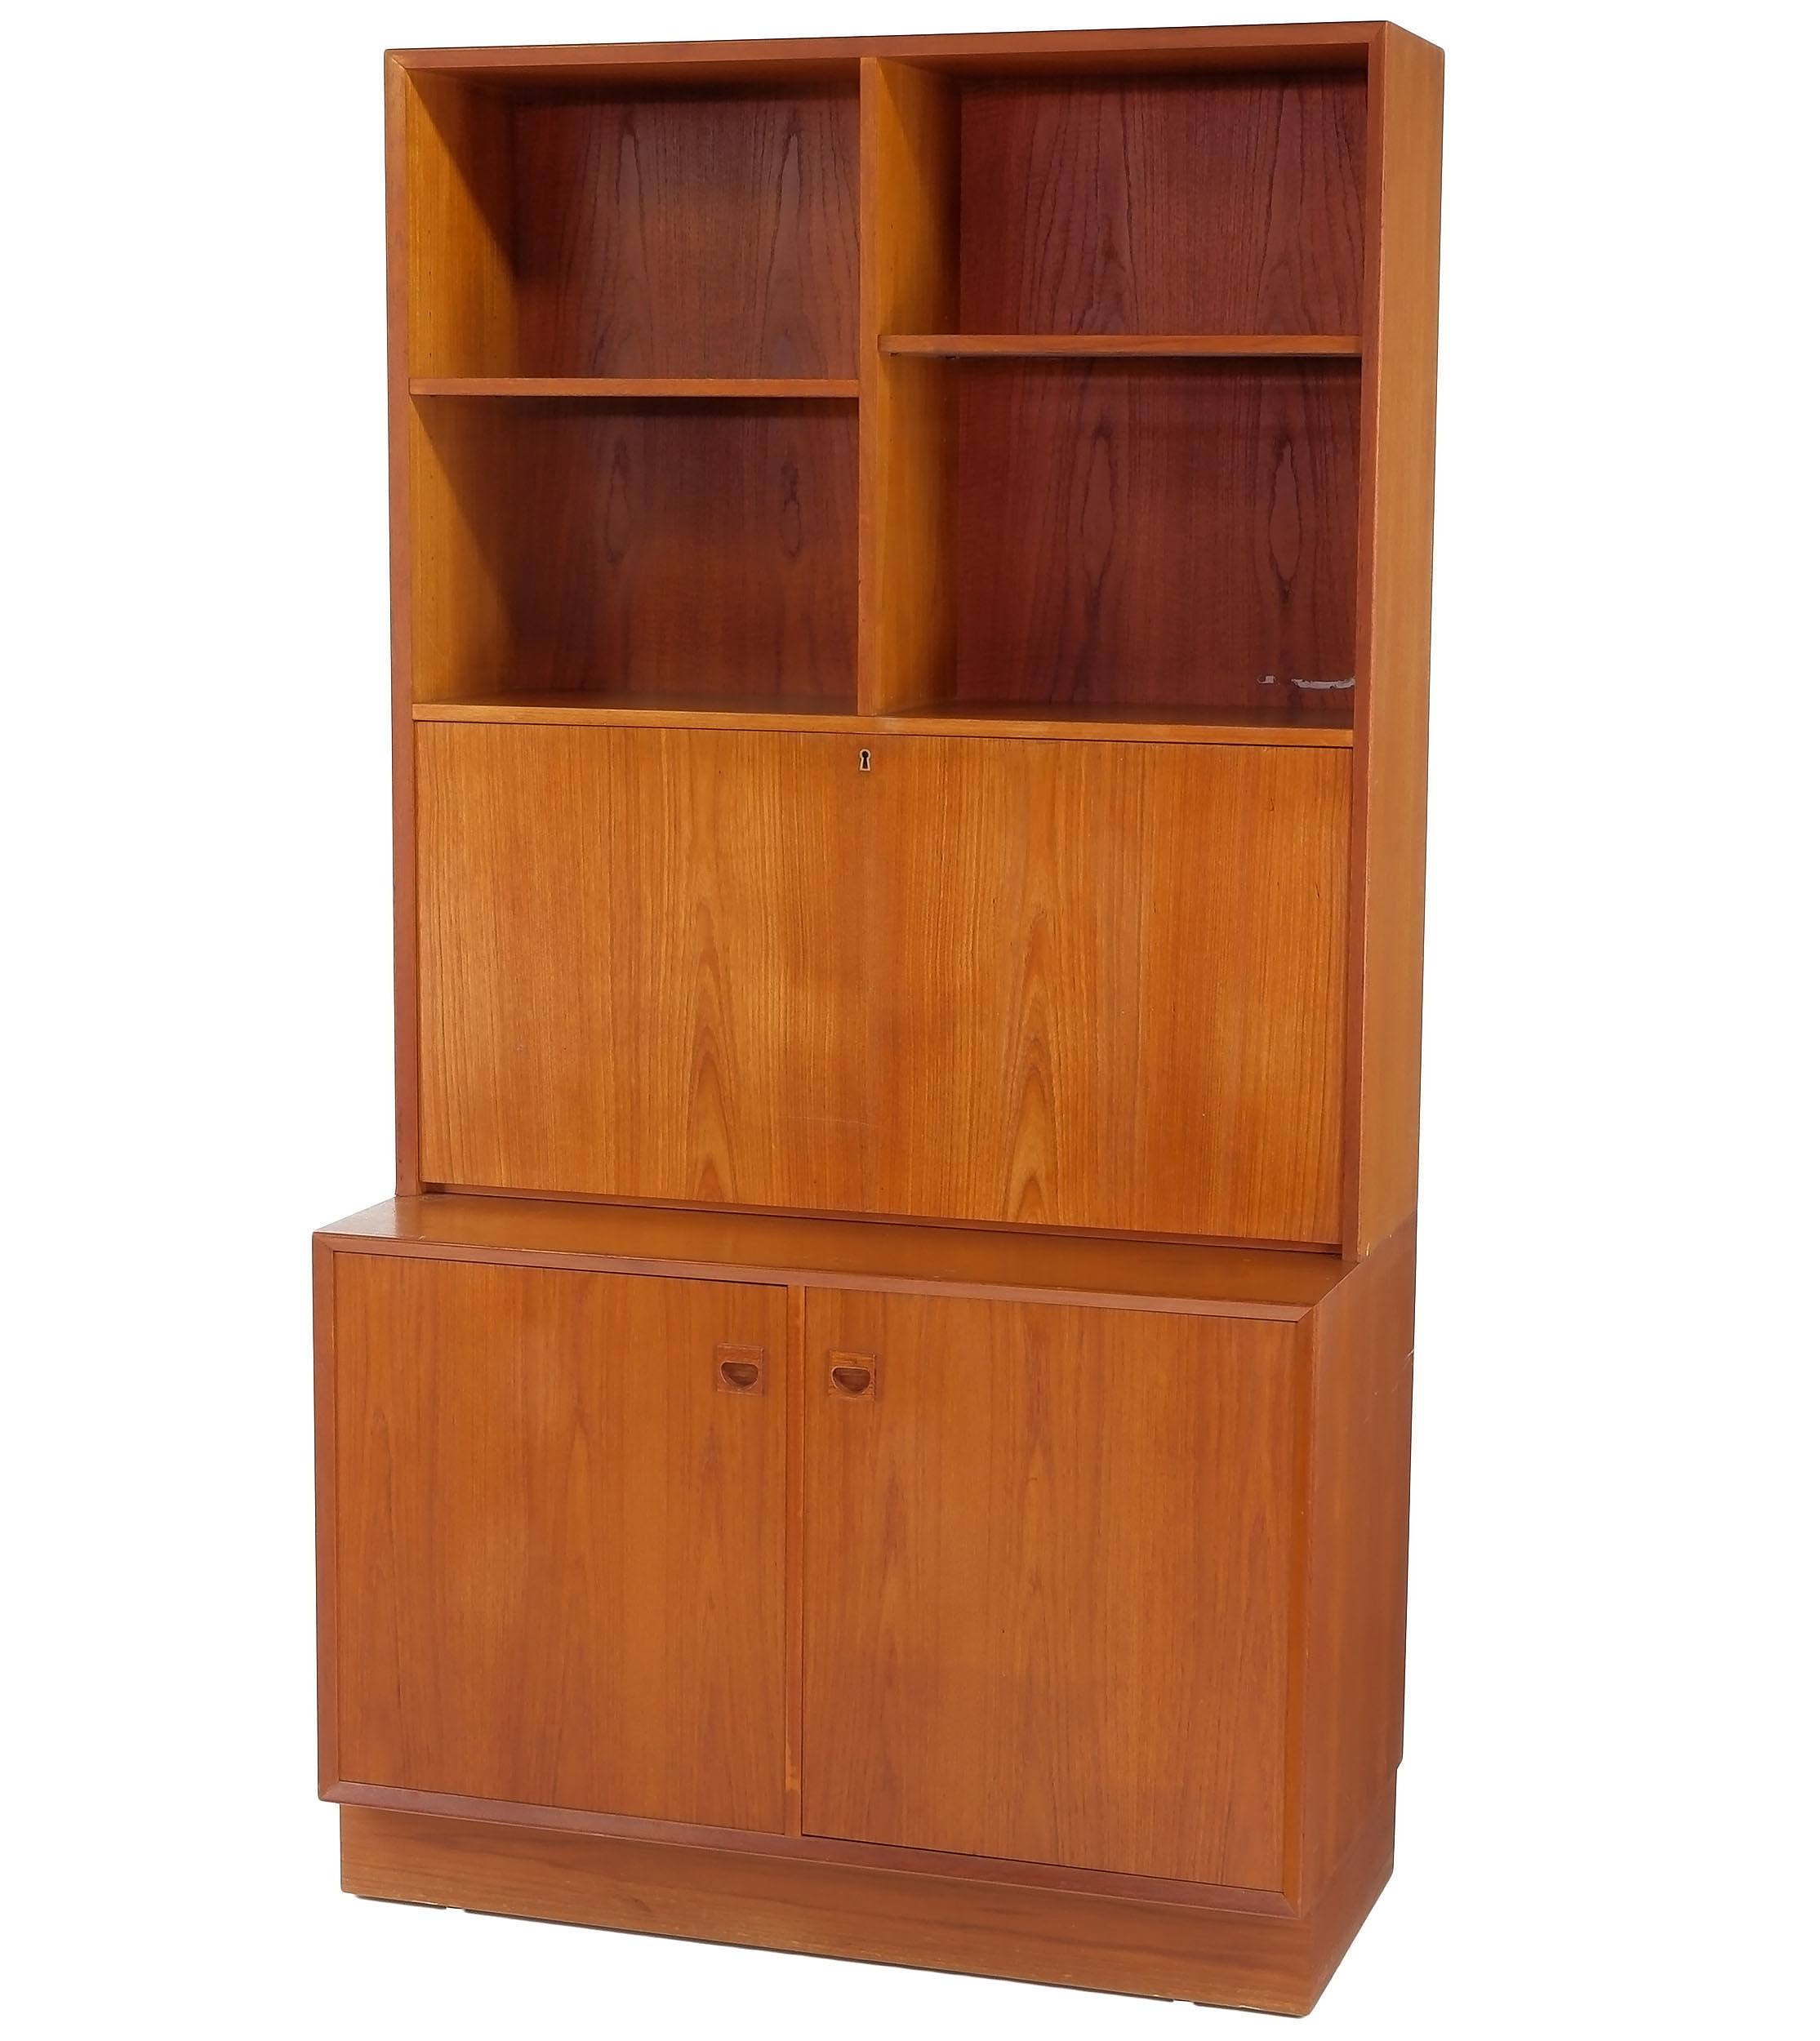 'Brouer Mobelfabrik Denmark Teak Secretaire Bookcase Designed by Erik Brouer'